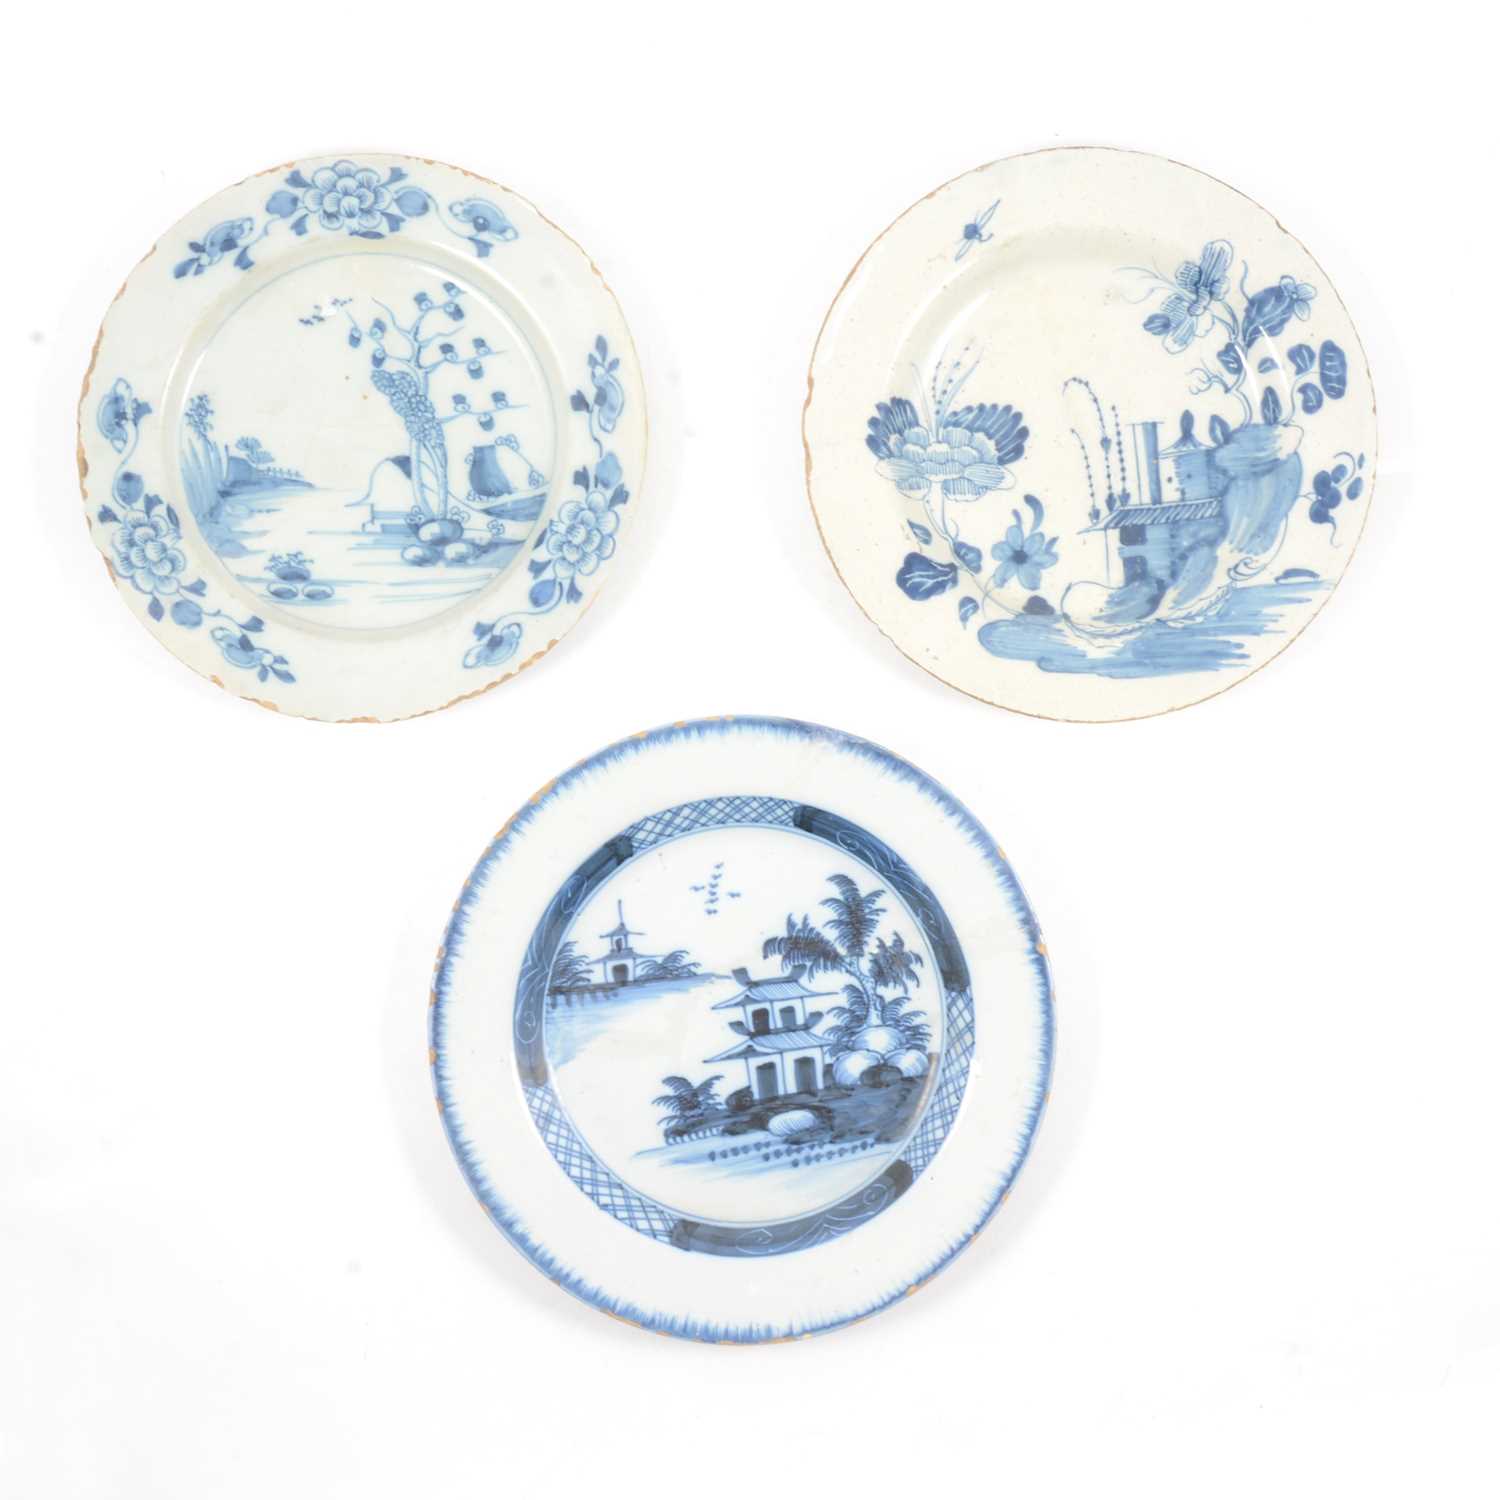 Lot 5 - Three delft blue and white plates